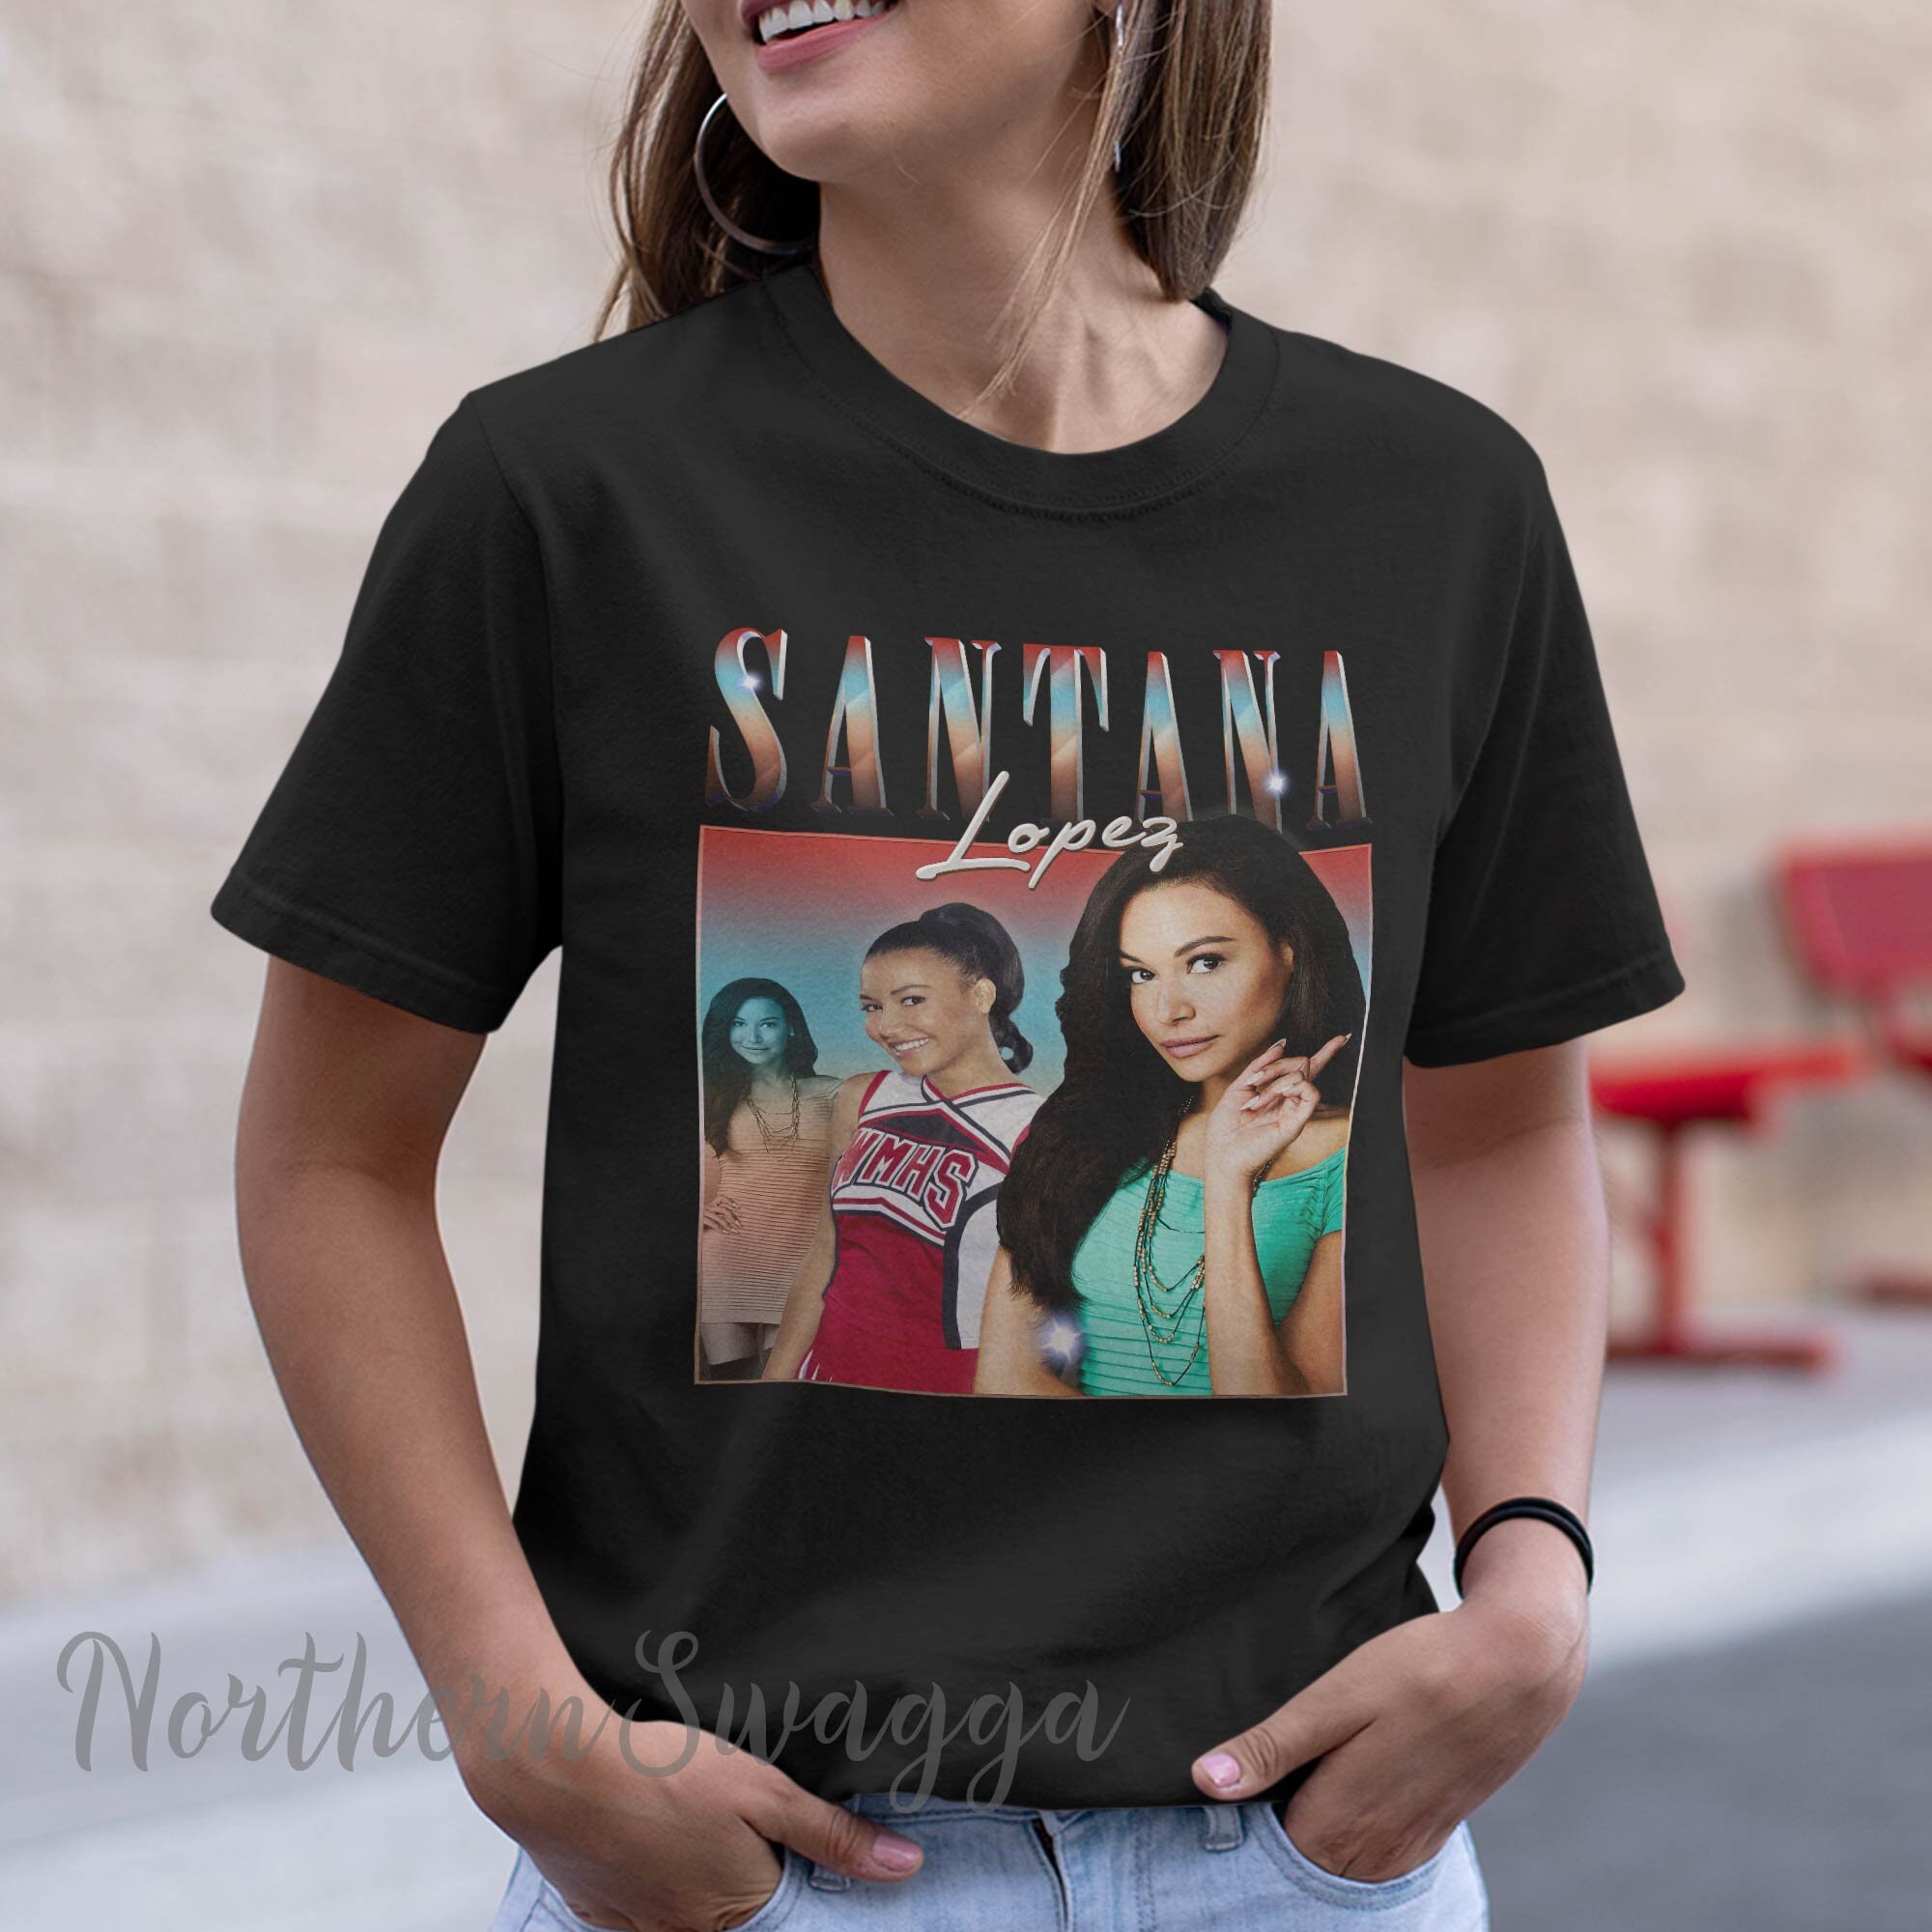 Santana lopez shirt cool fan art t-shirt 90s poster design retro style 95 tee